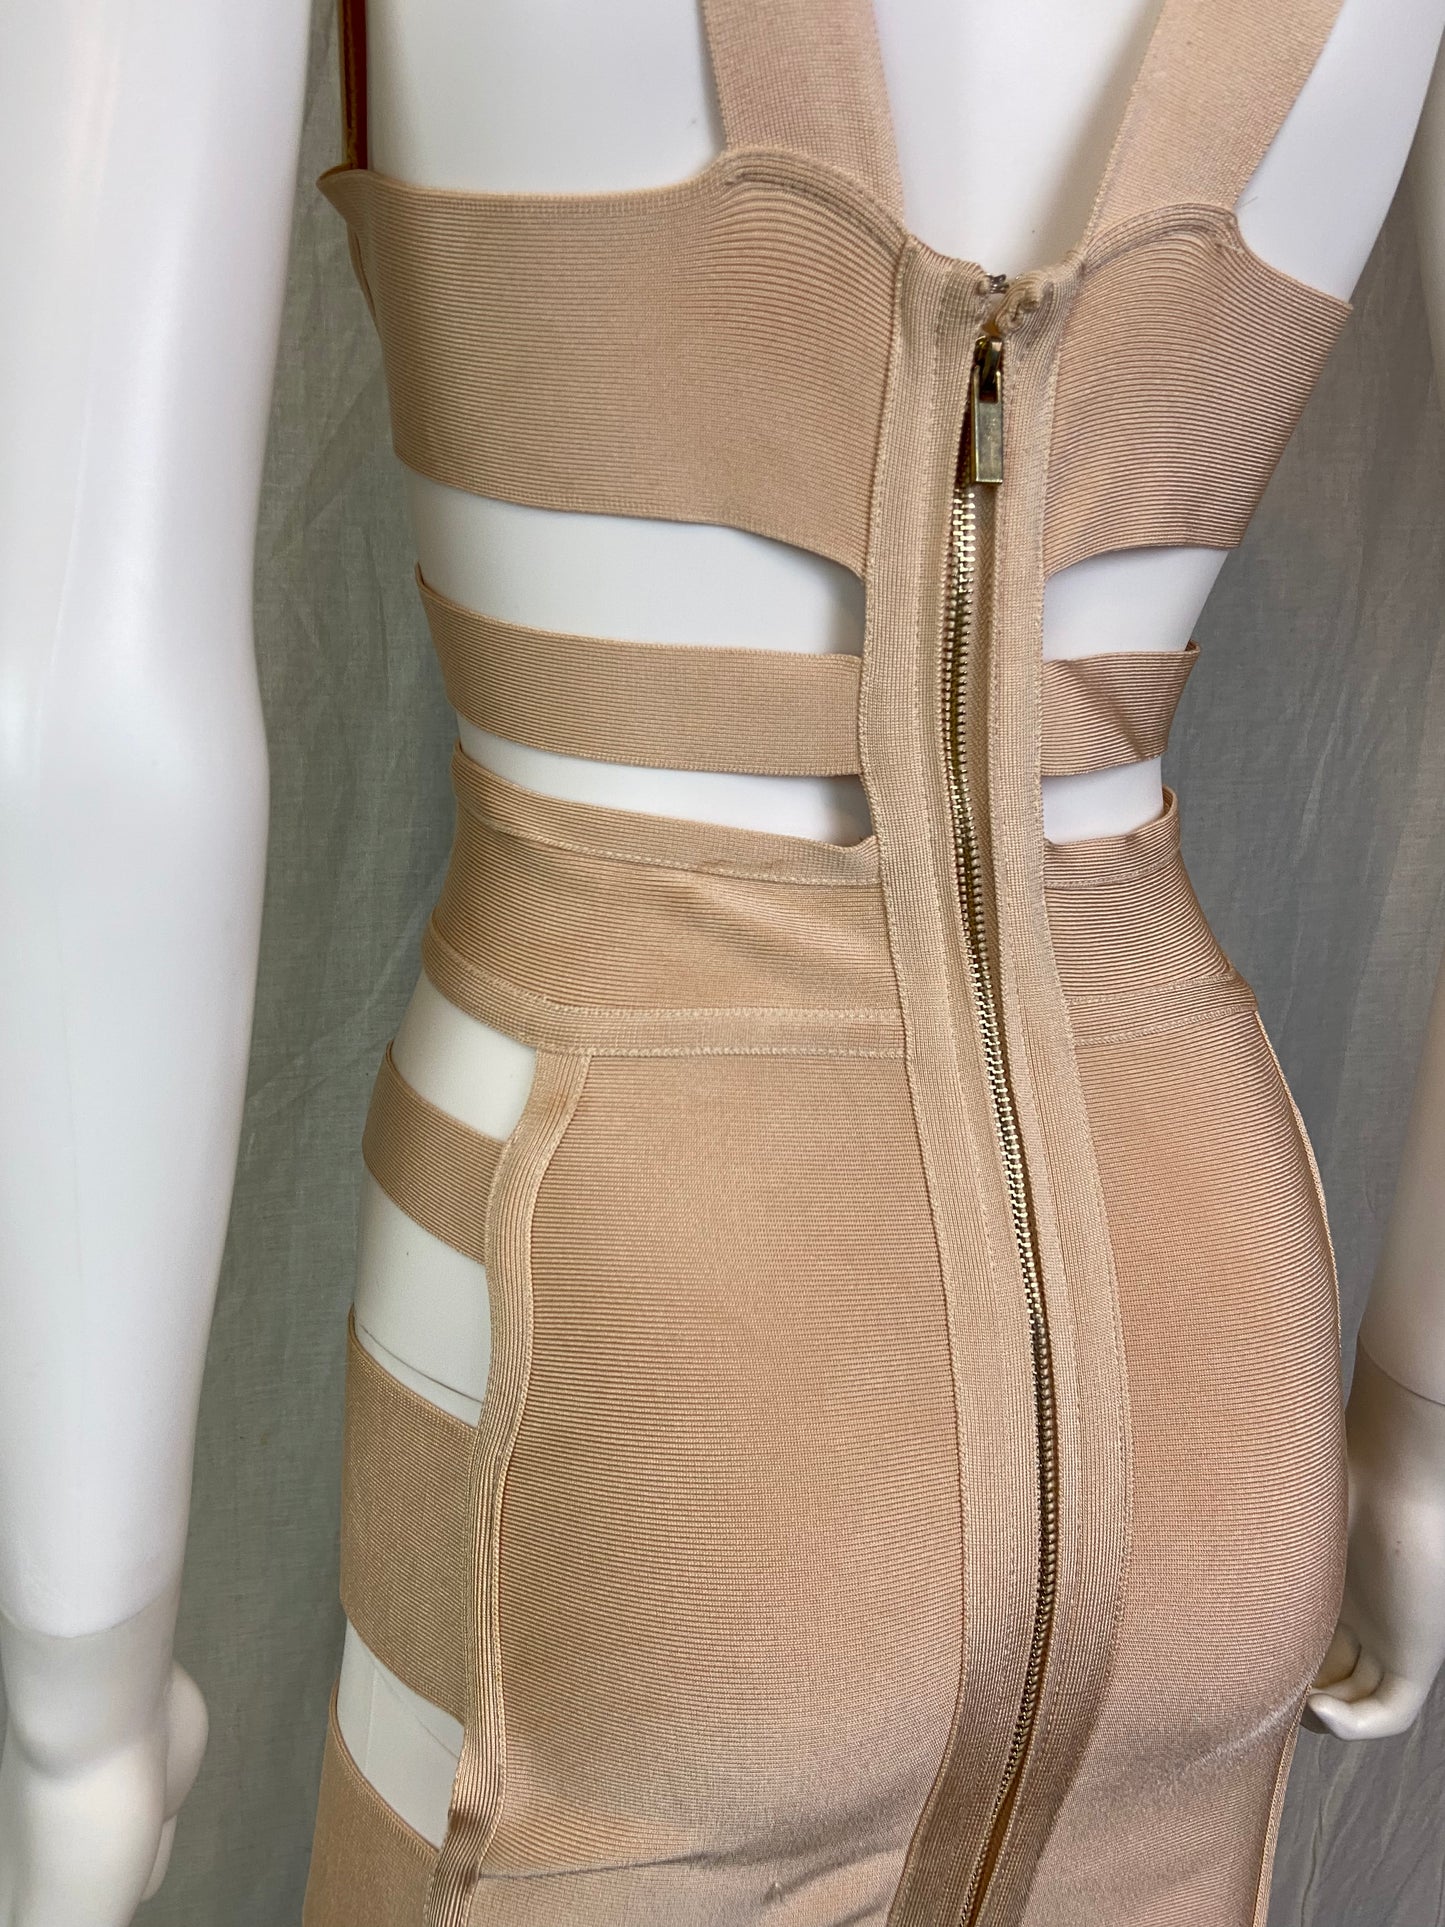 Herve Leger style Beige Plunge Cut Out Bandage Mini Dress